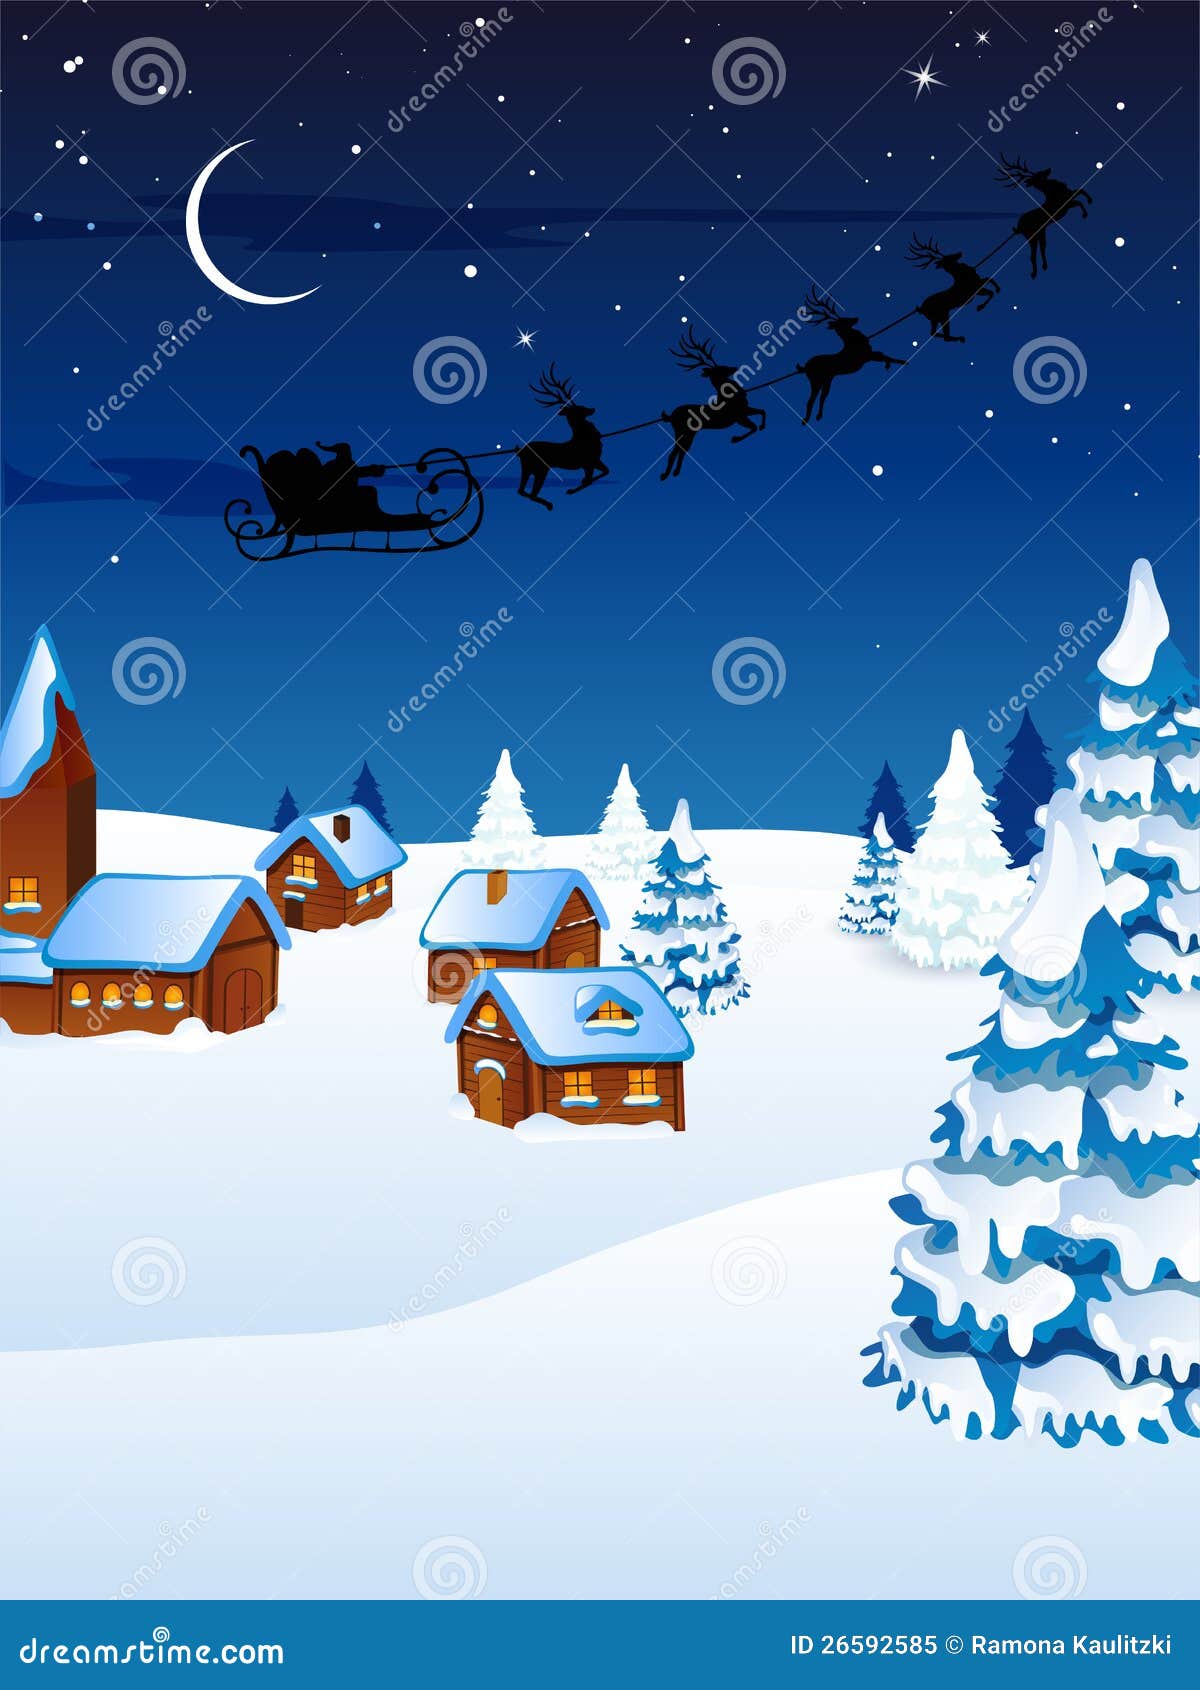 Winter Scene - Christmas Card Stock Illustration - Image 